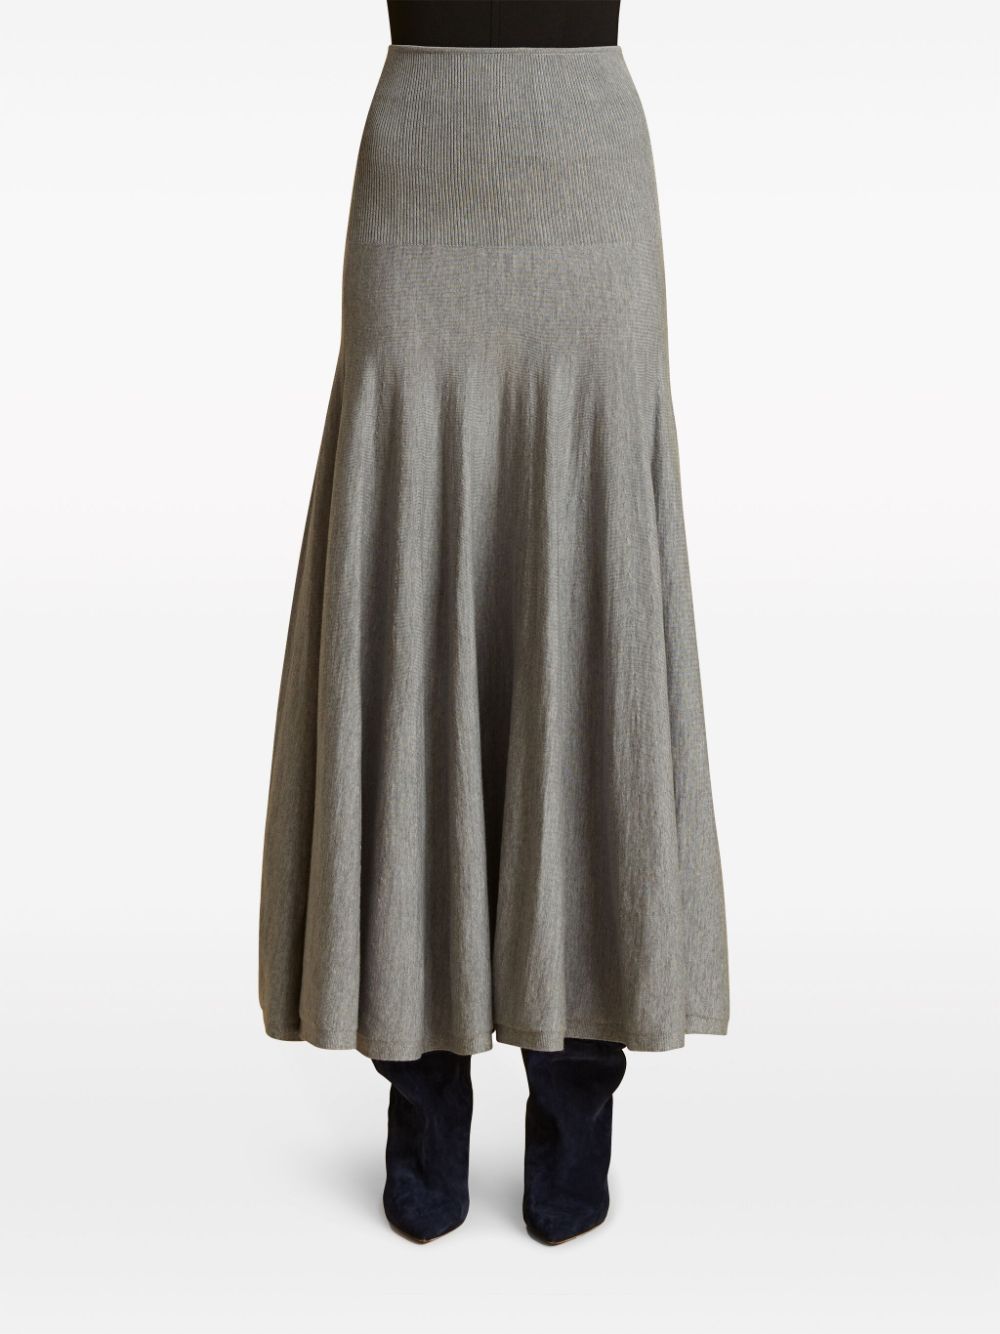 THE REMINO 针织羊毛半身裙